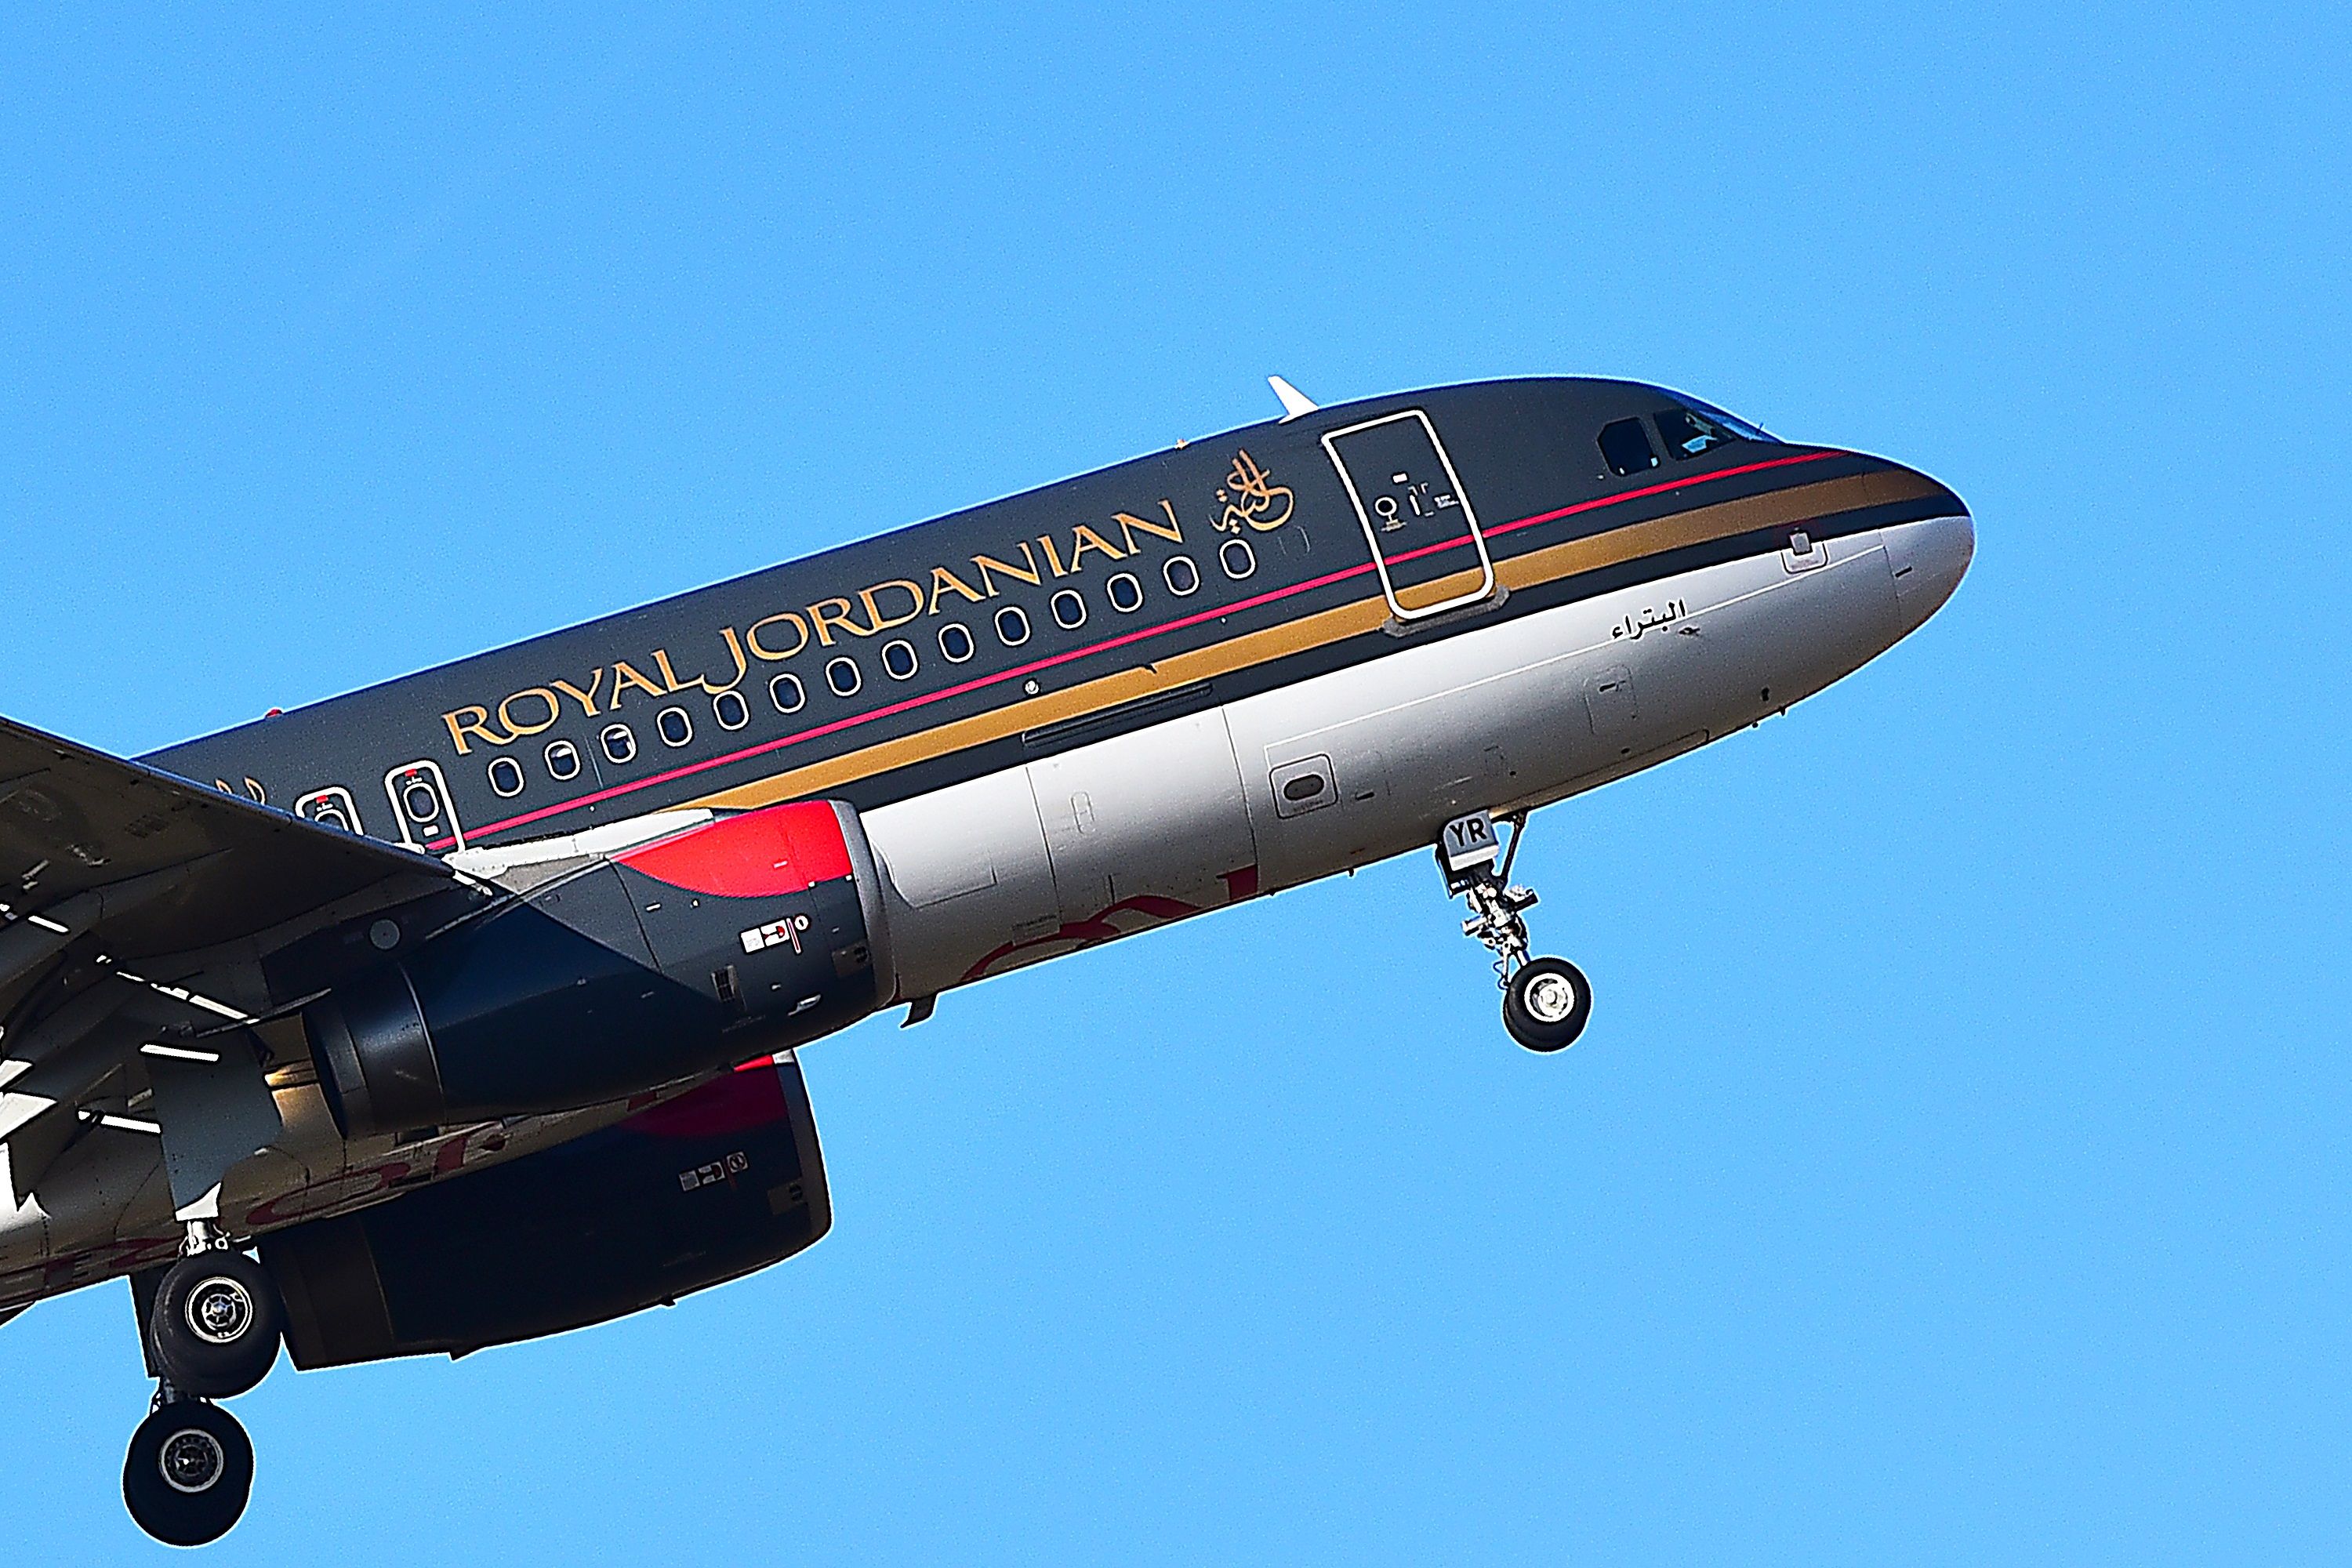 Royal Jordanian Airlines taking off